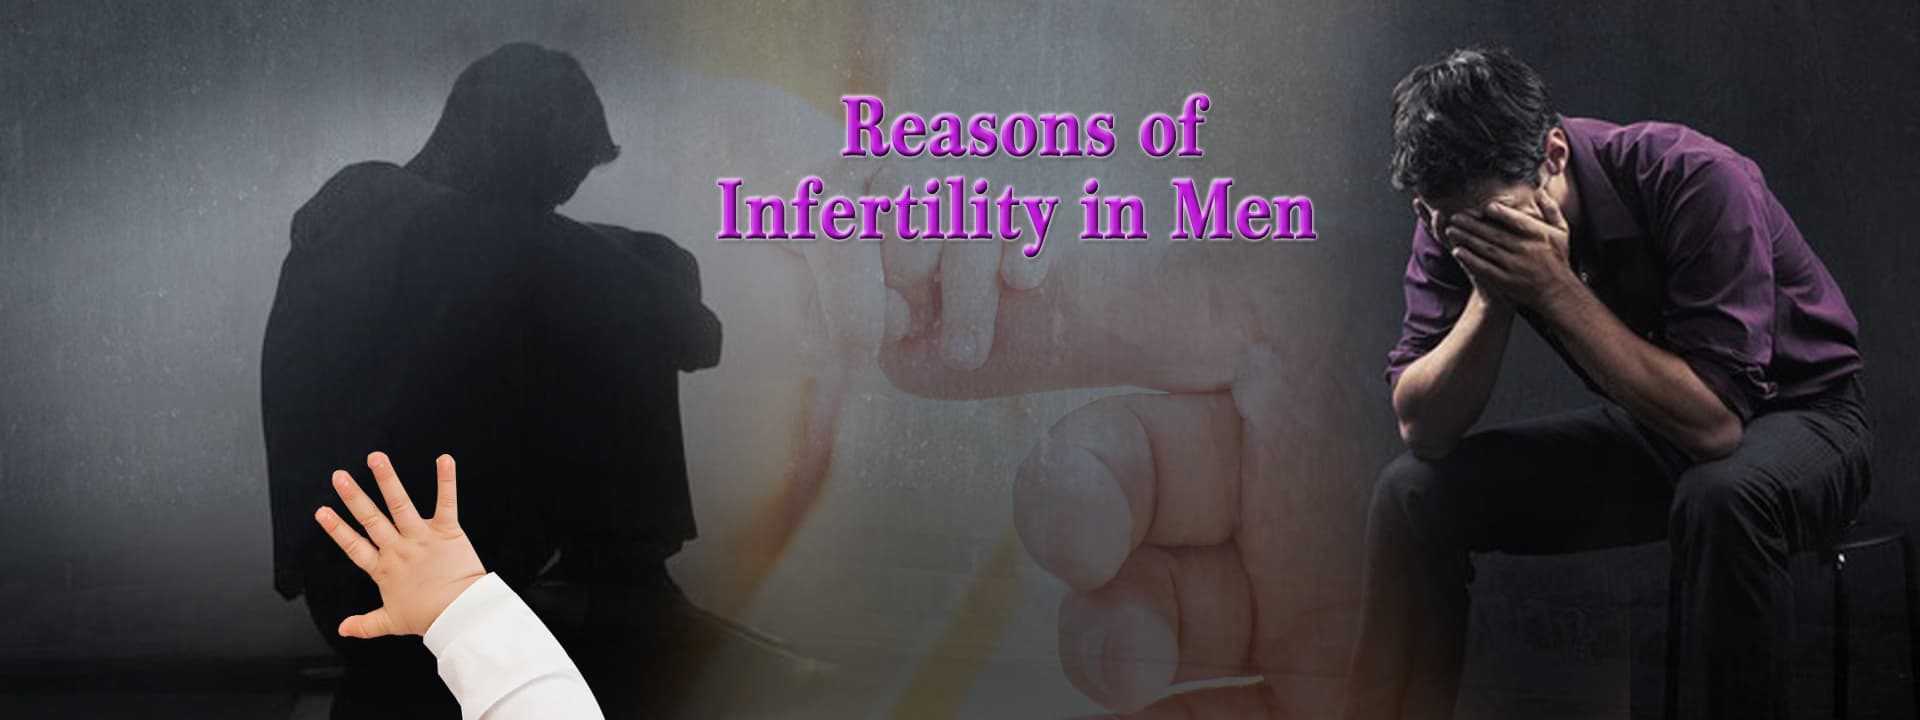 infertility-men